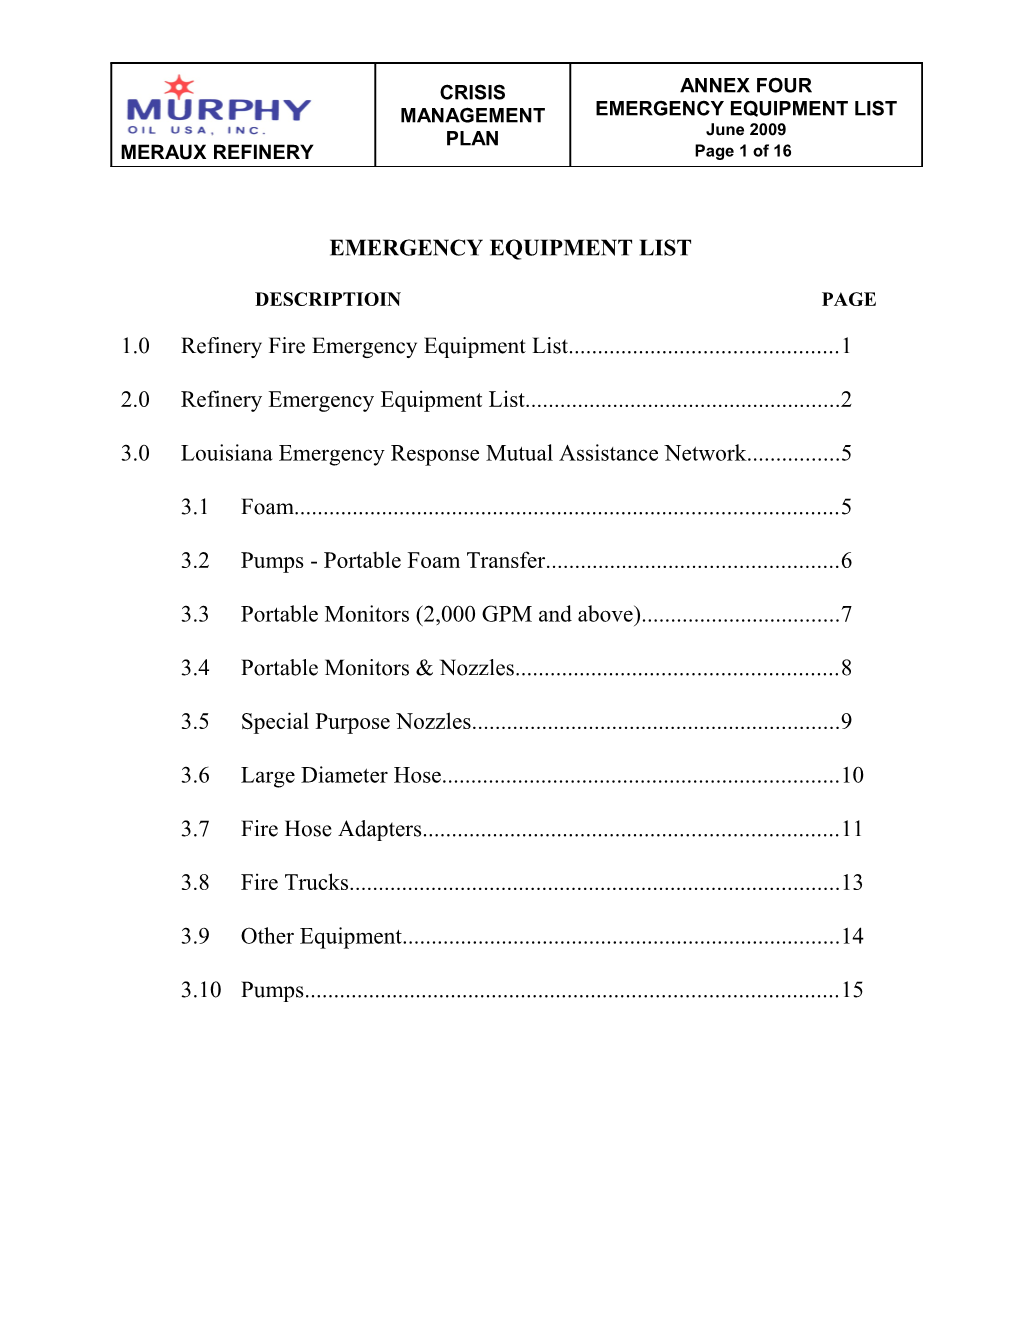 Emergency Equipment List